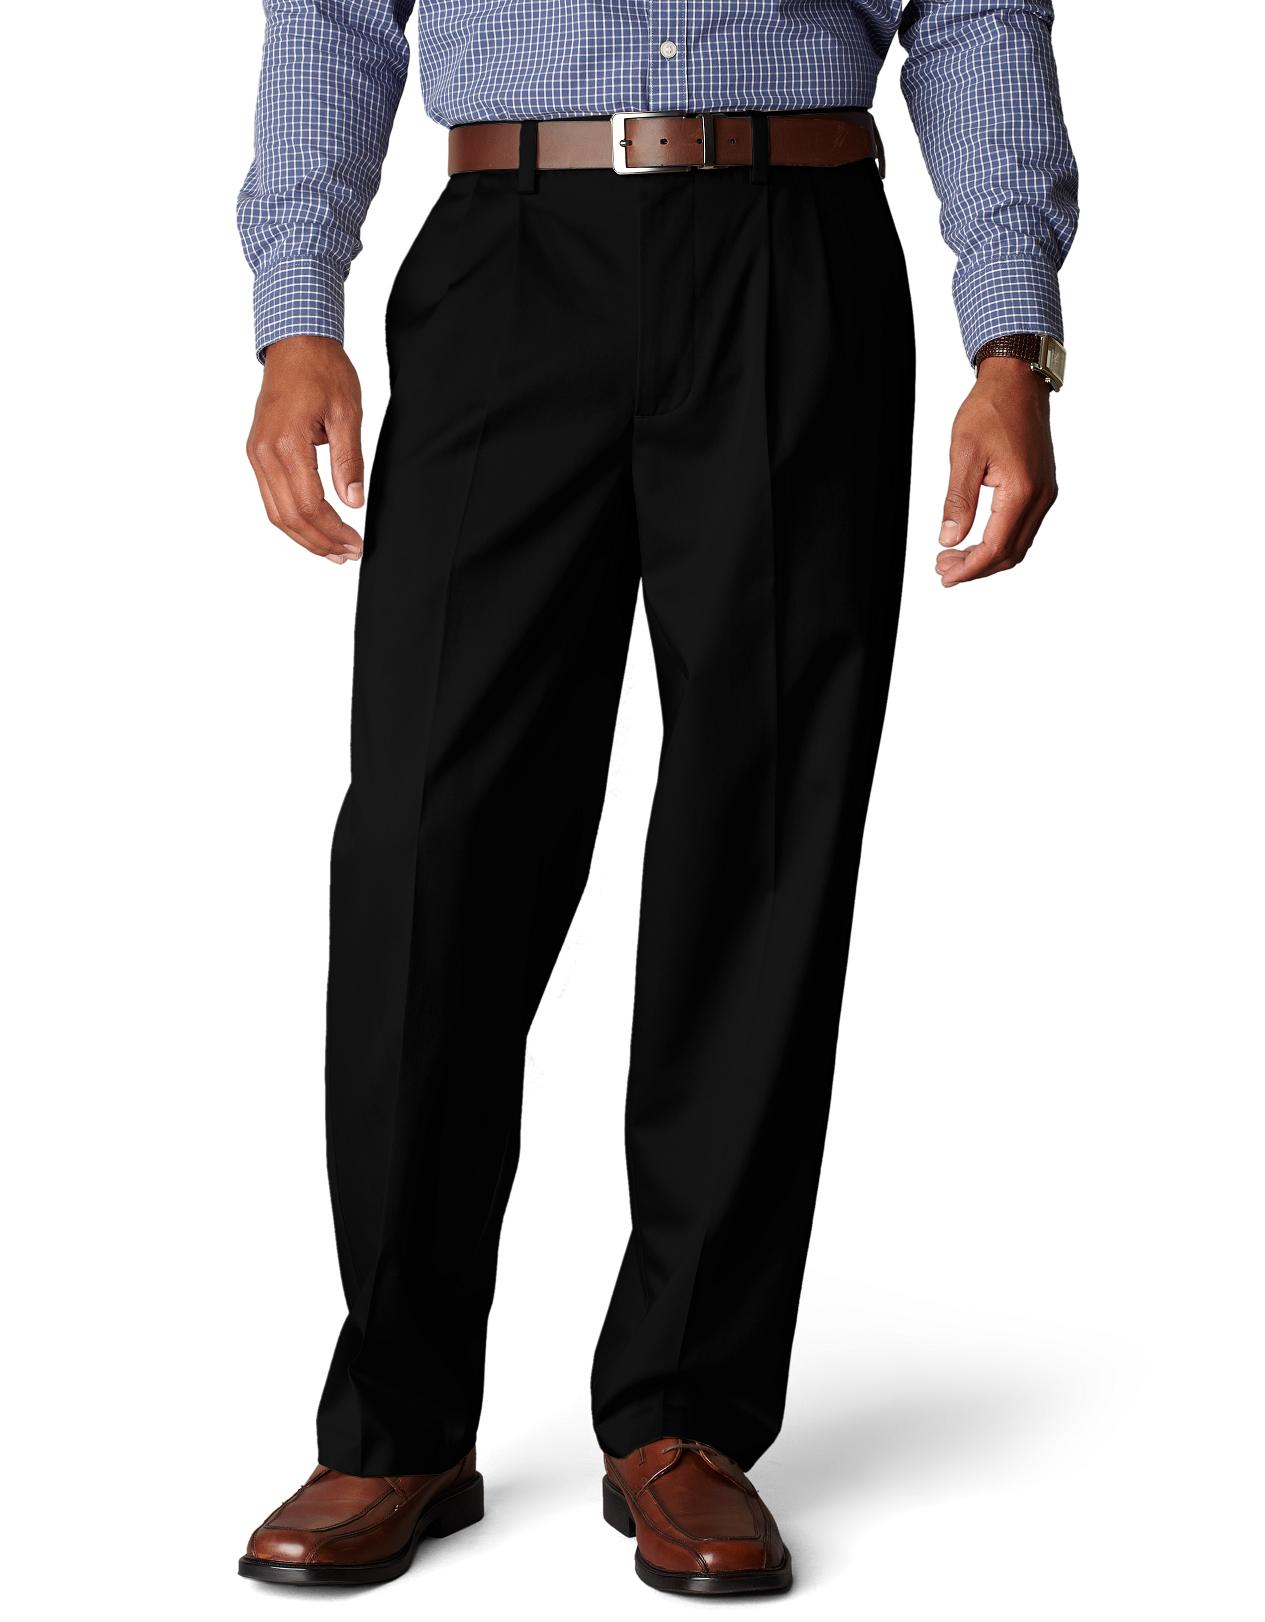 Dockers Men's Signature Khaki D4 Relaxed Fit Pleated Pants